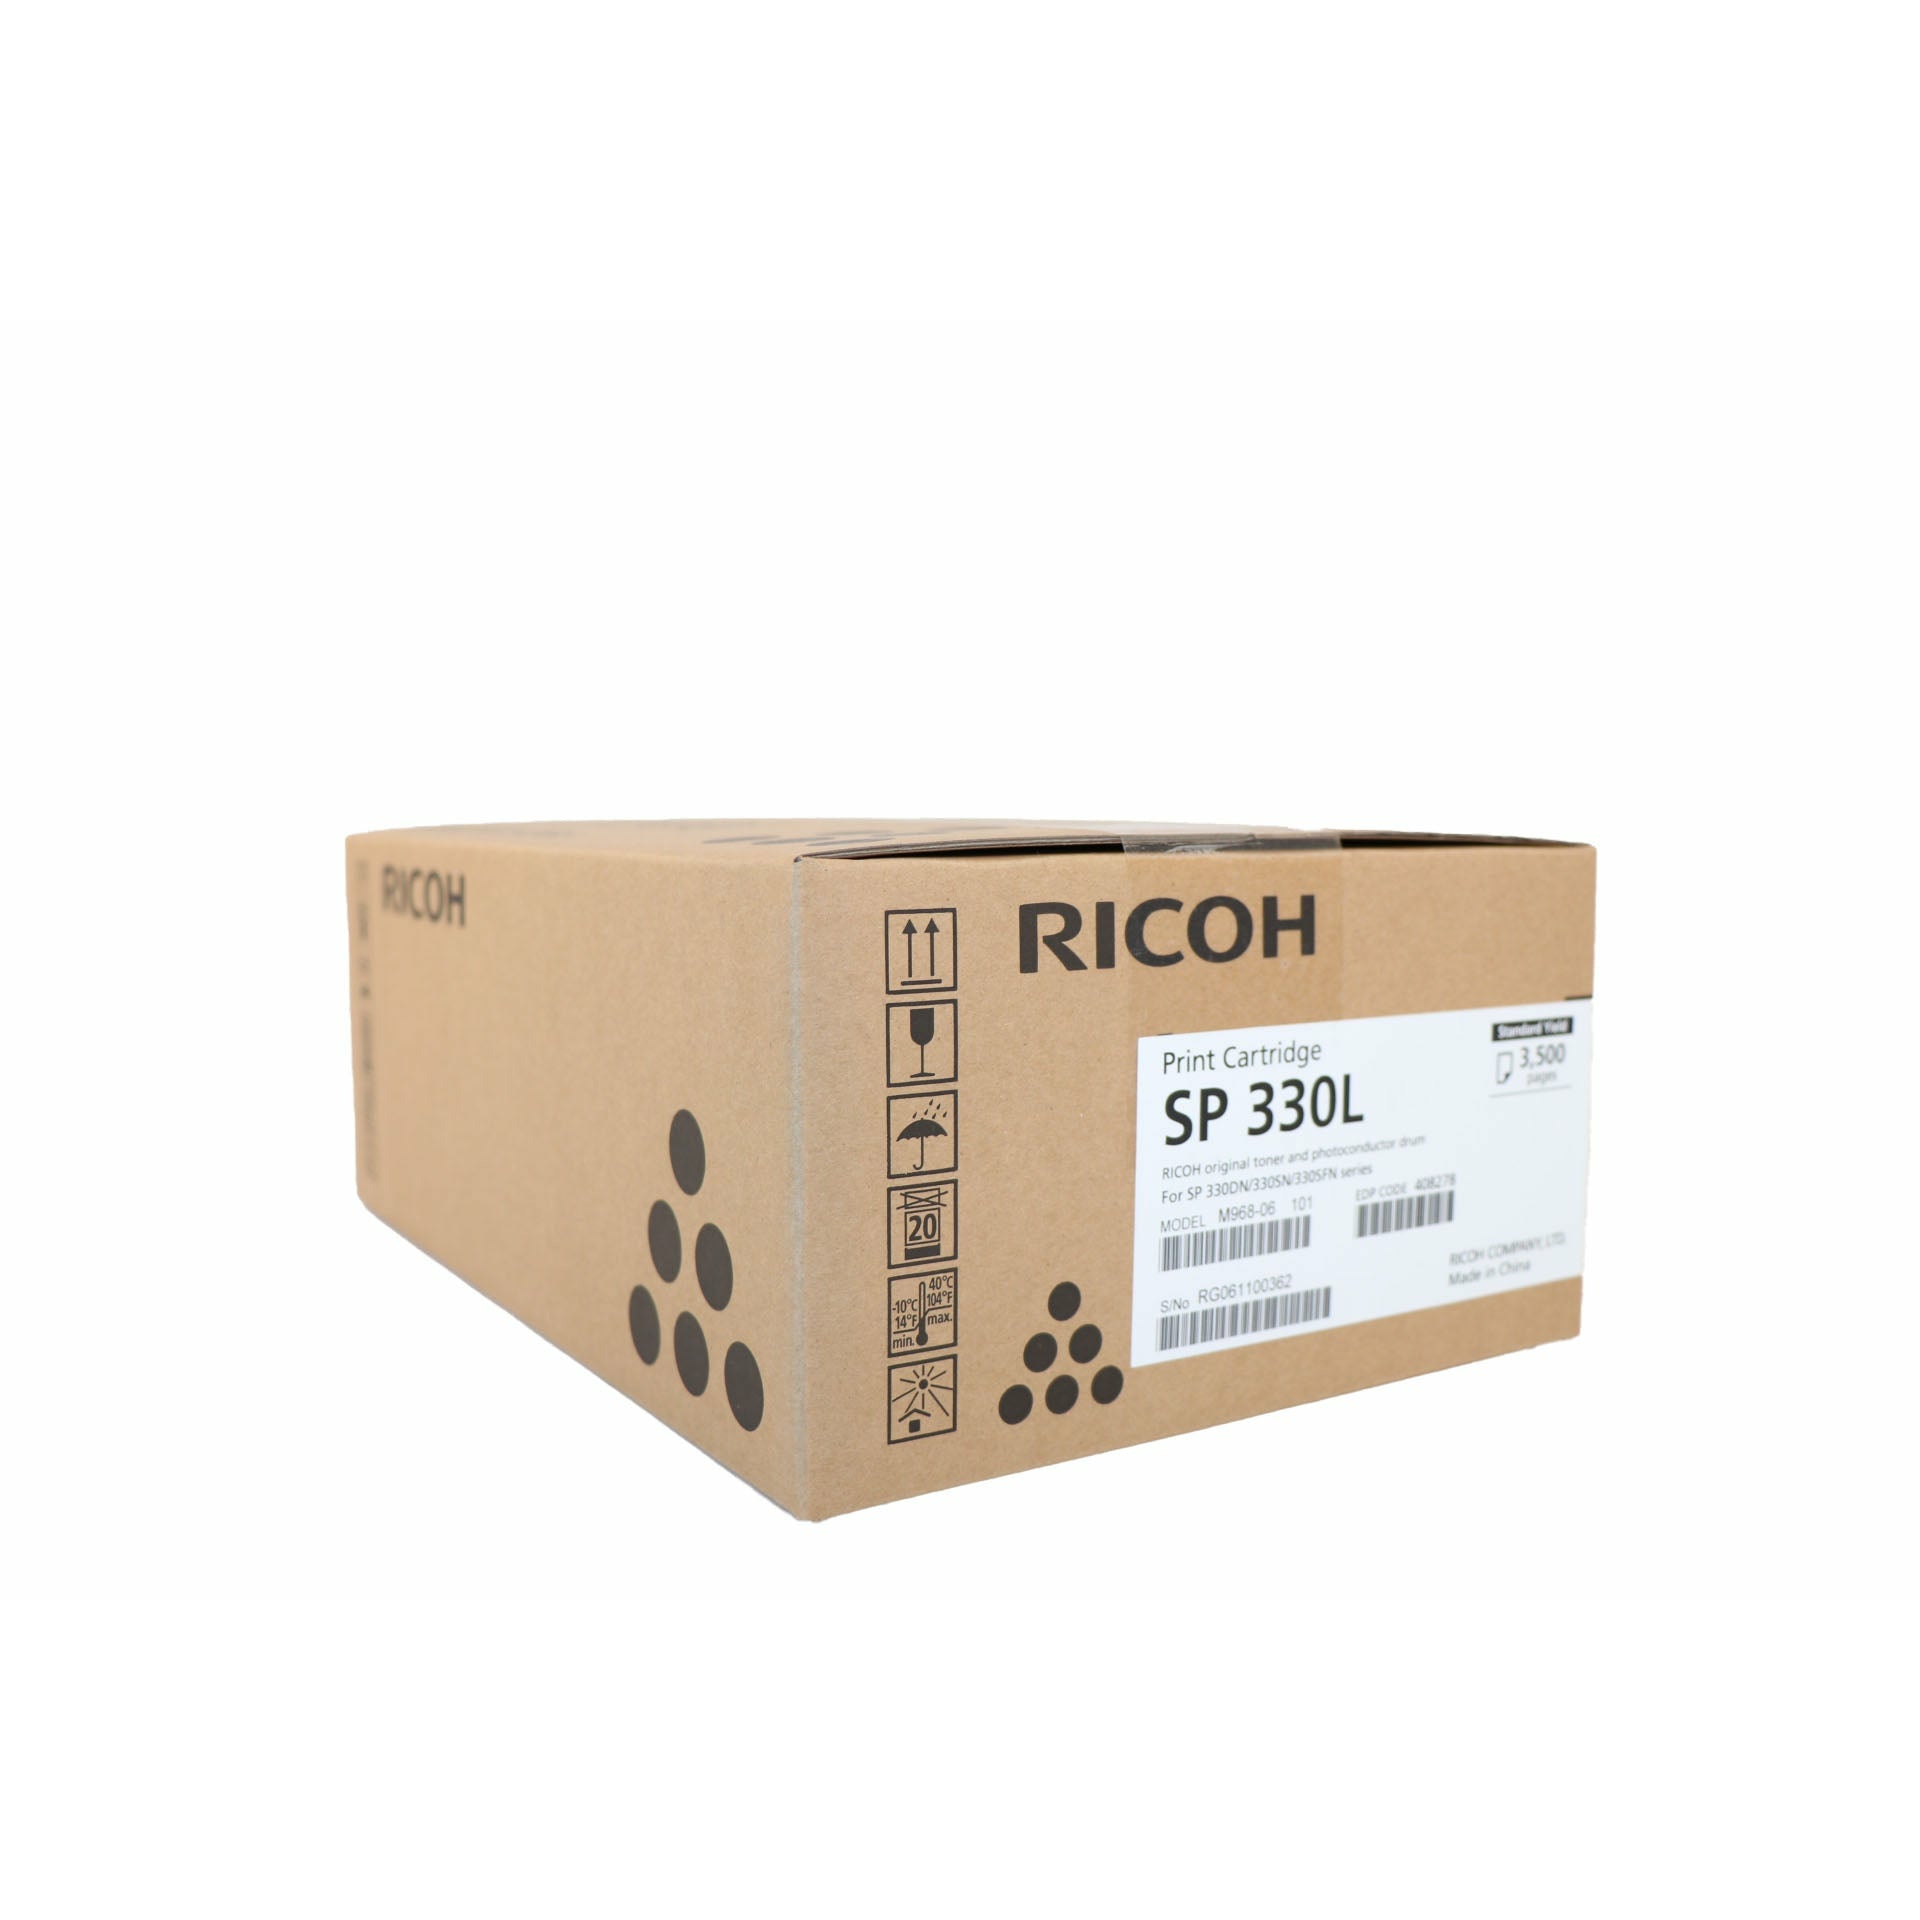 Ricoh Toner Cartridge 408278 Standard Capacity SP 330L black